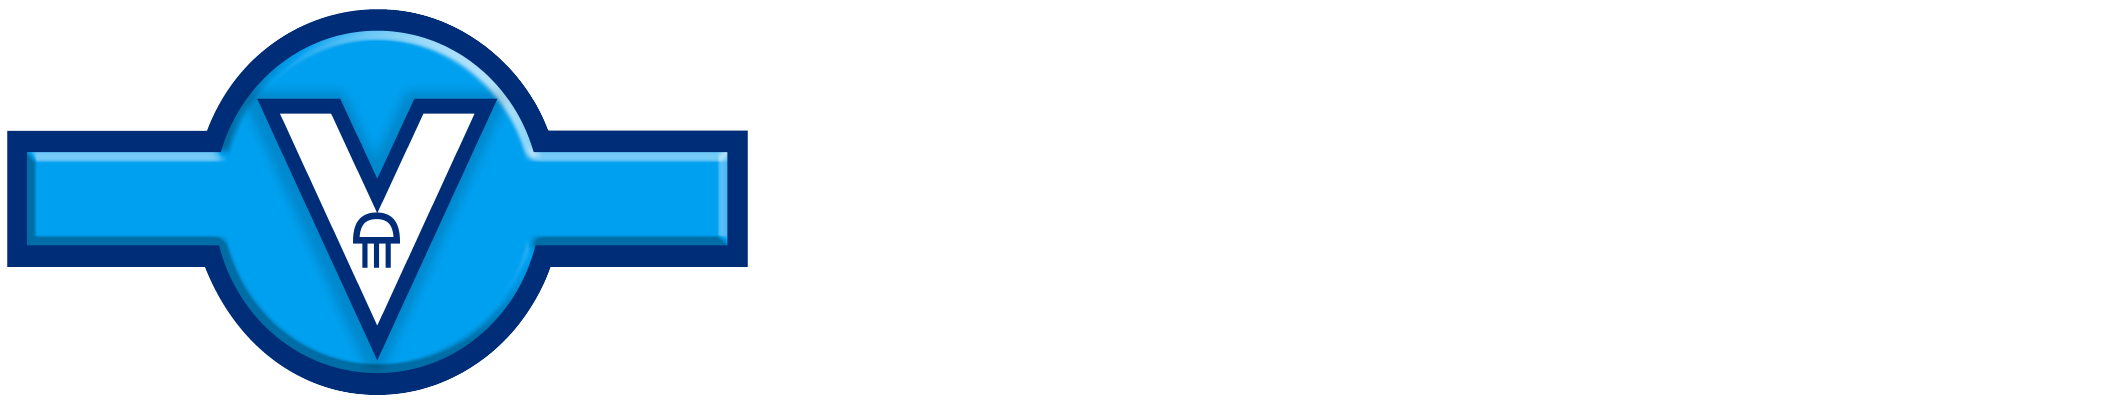 Vesh Electrical Services - Sydney Electrical Services